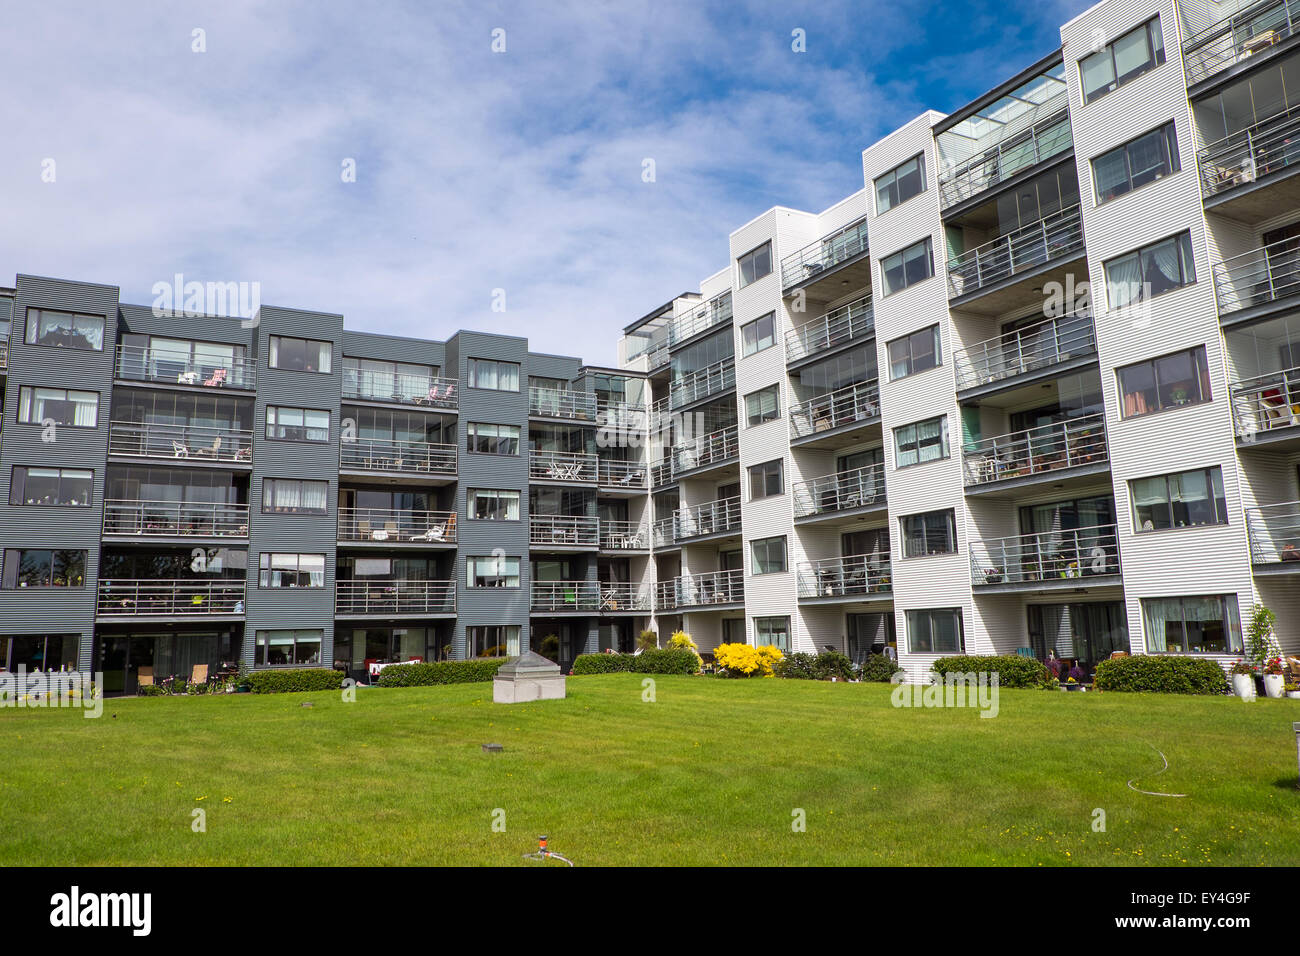 Modern housing complex seen in Reykjavik, Iceland Stock Photo